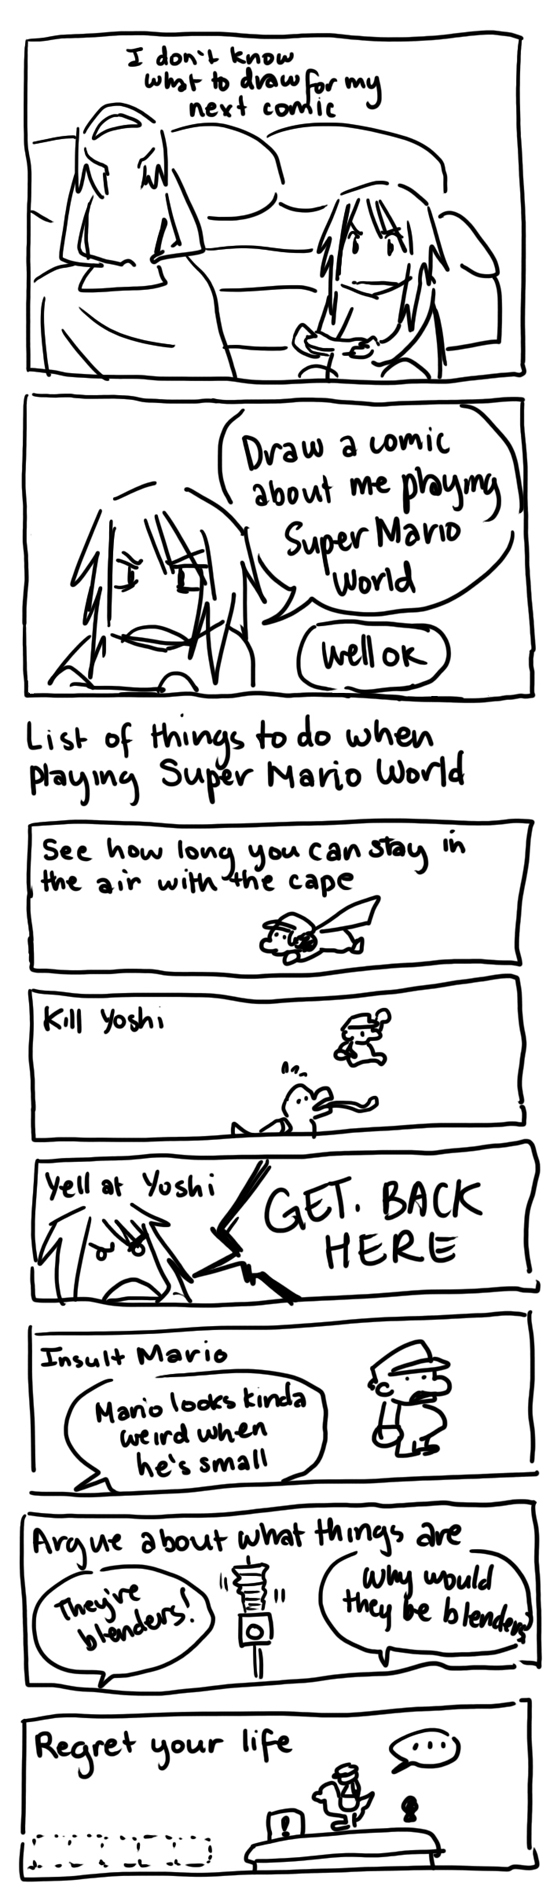 Summer Break Comics: Super Mario World